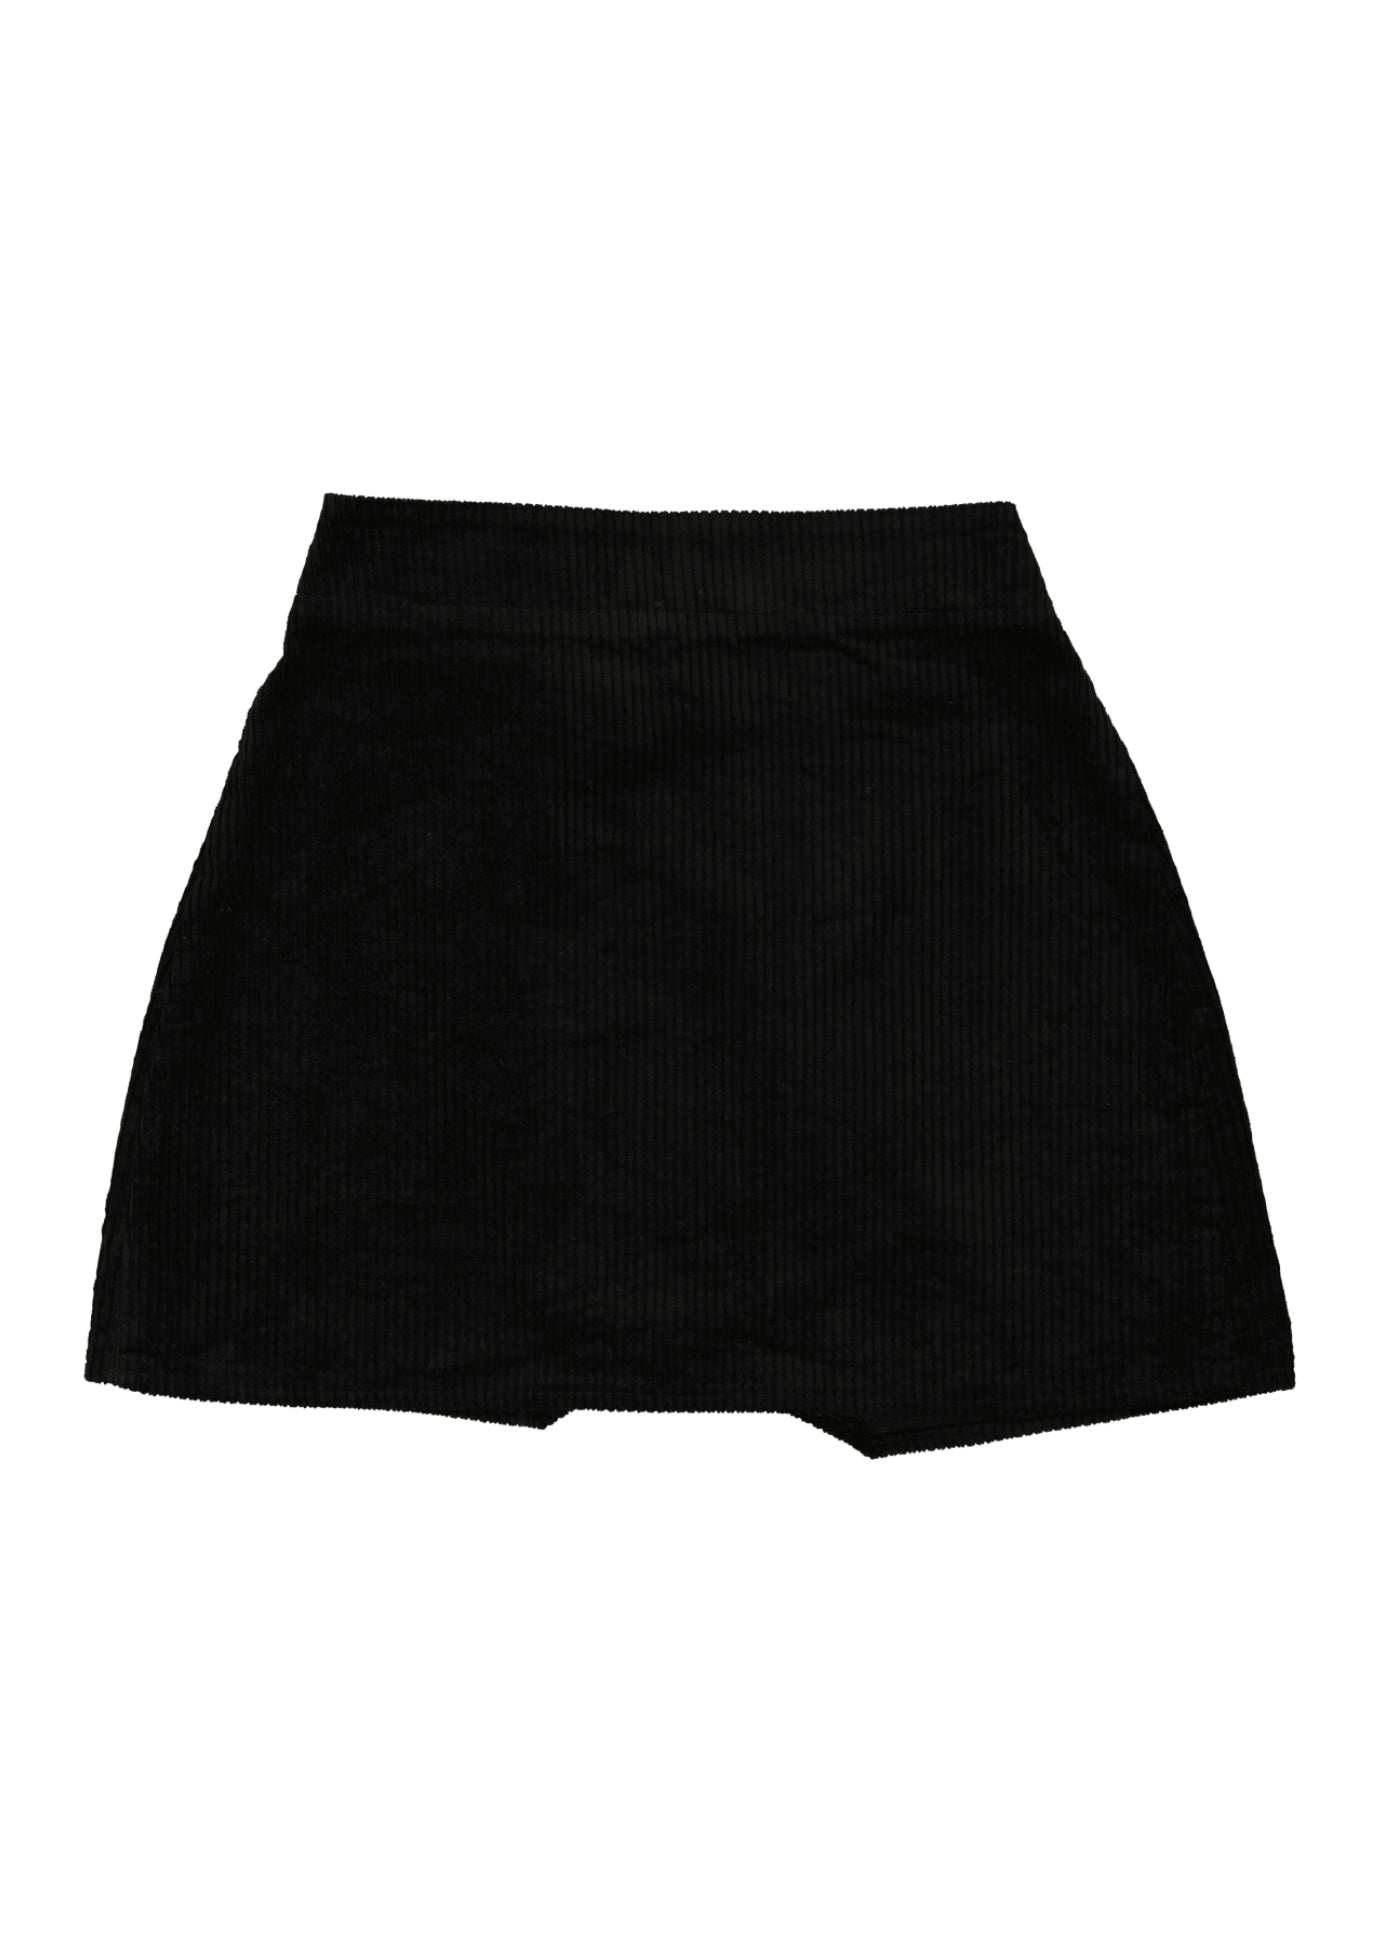 MARJ upcycling fashion brand black cotton corduroy mini skirt